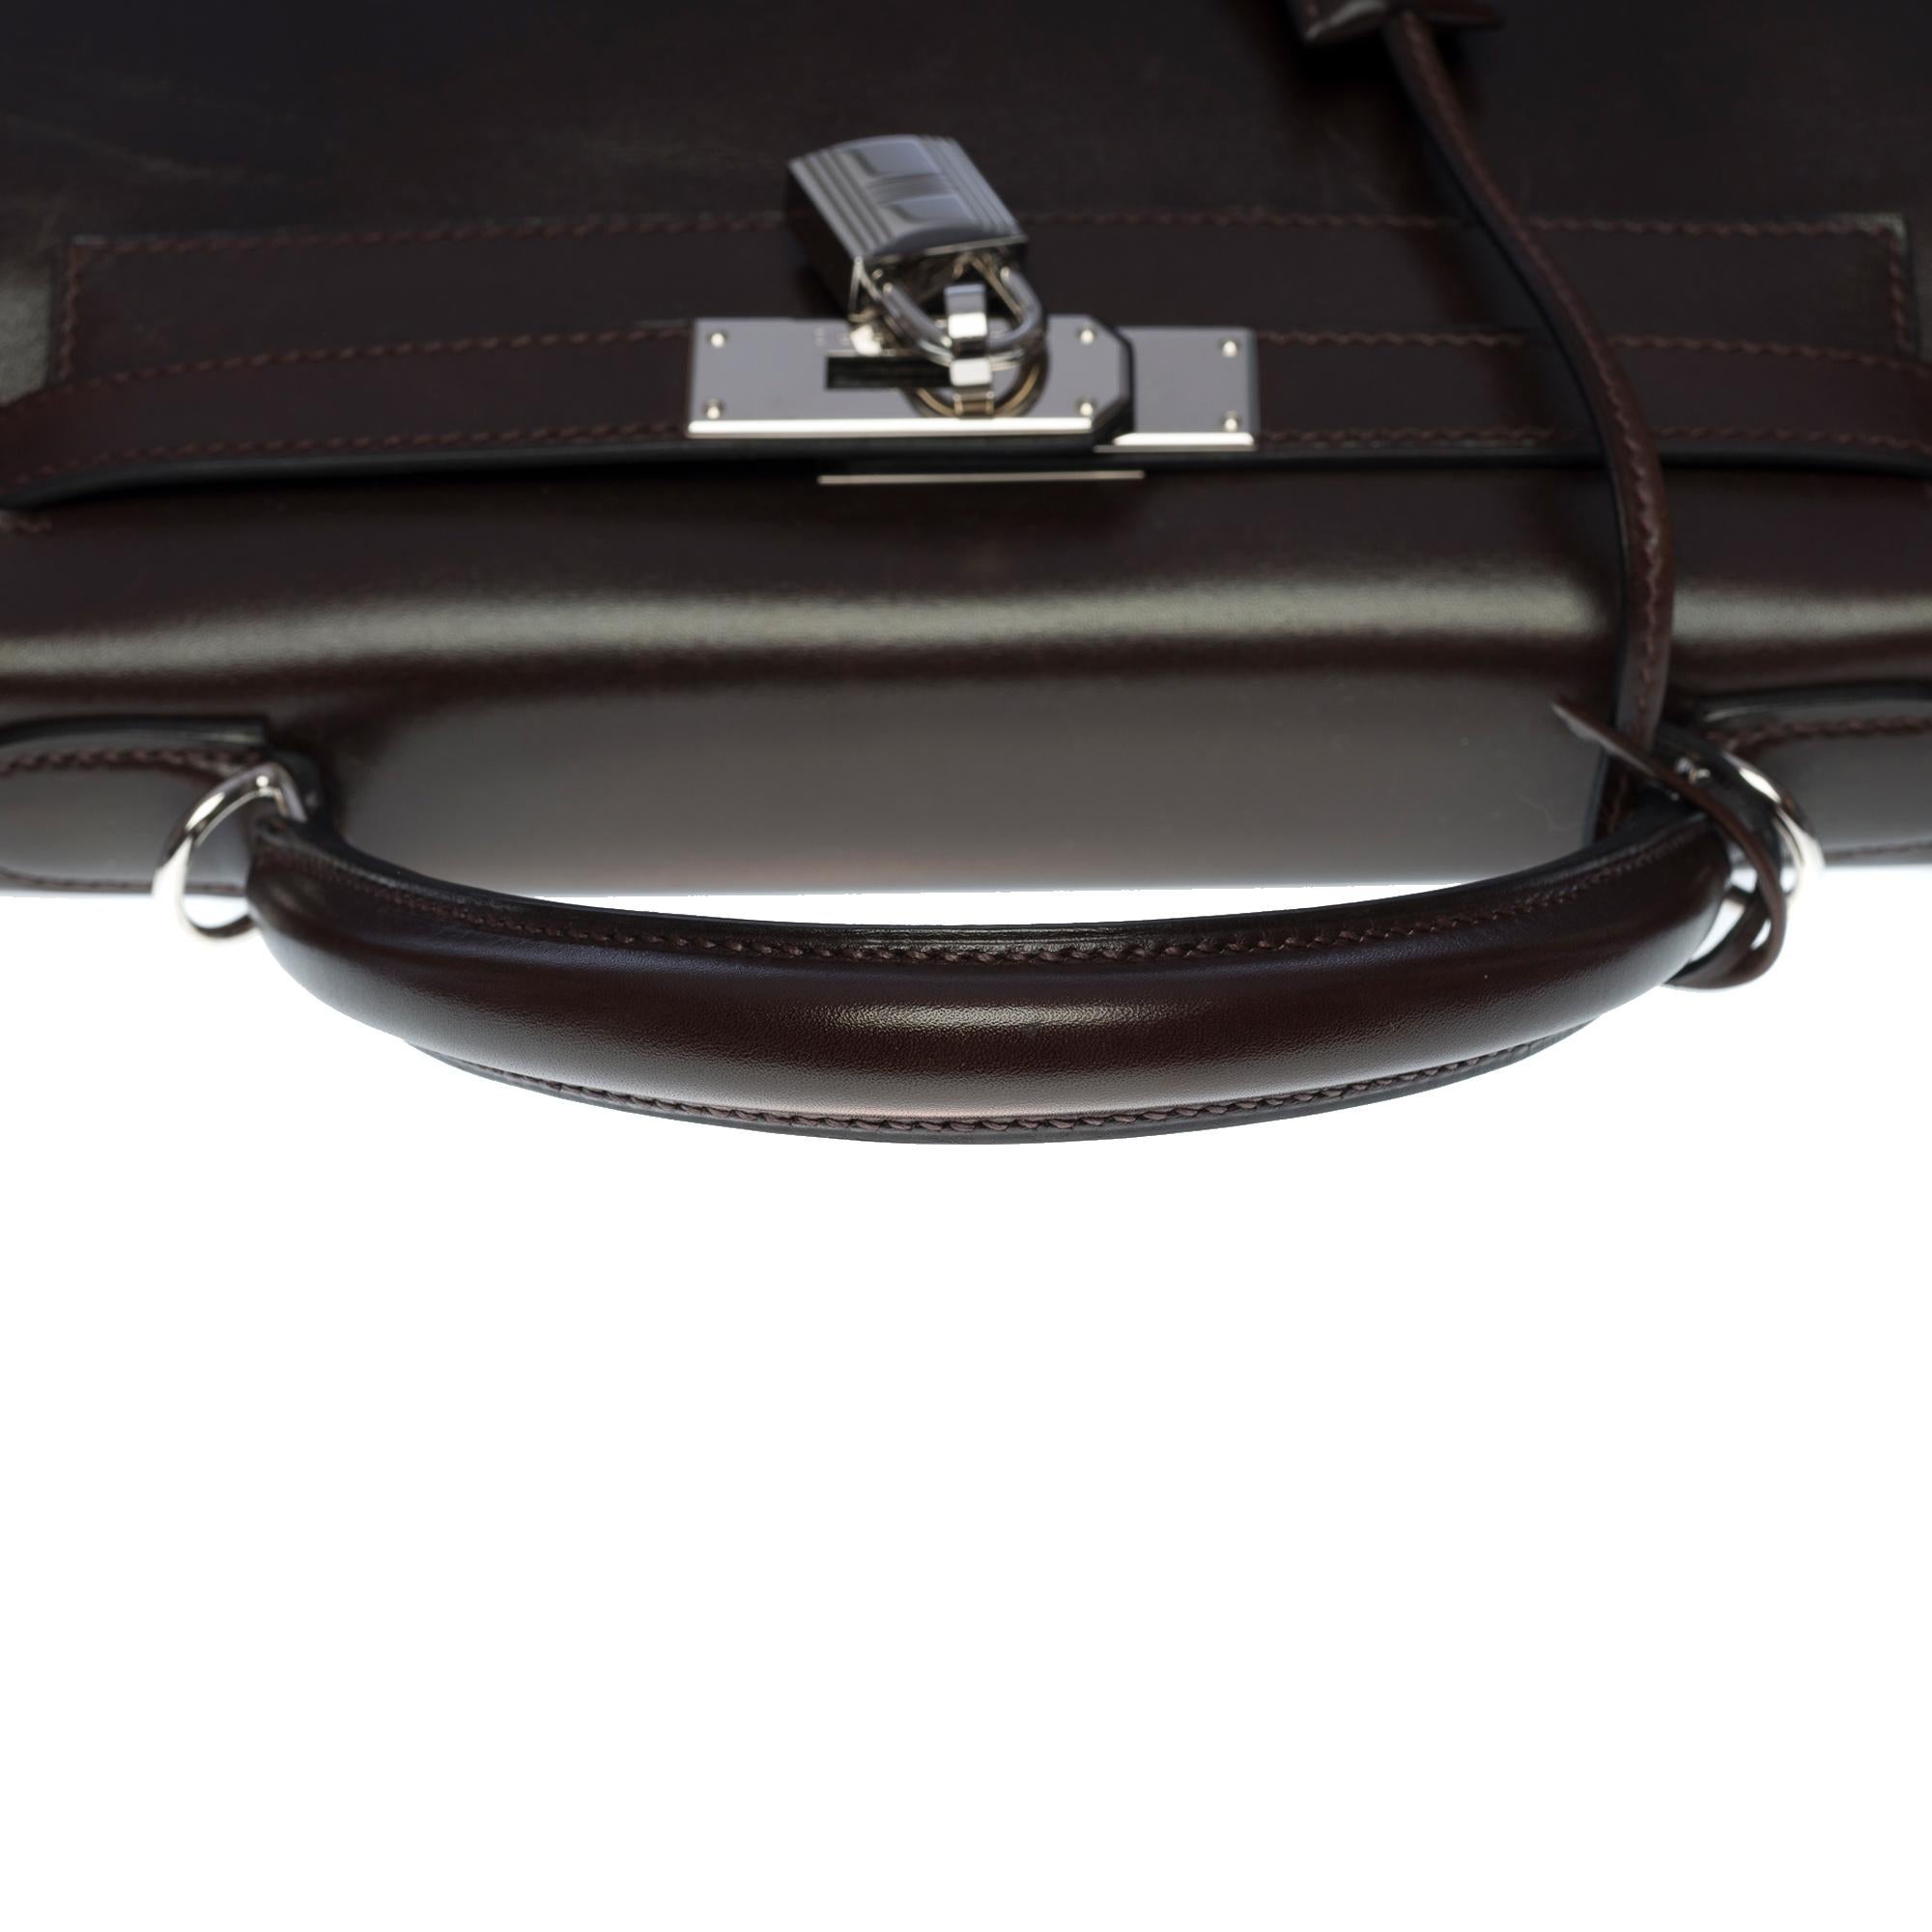 Magnificent Hermes Kelly 28 retourne handbag strap in Brown box calfskin, SHW 2